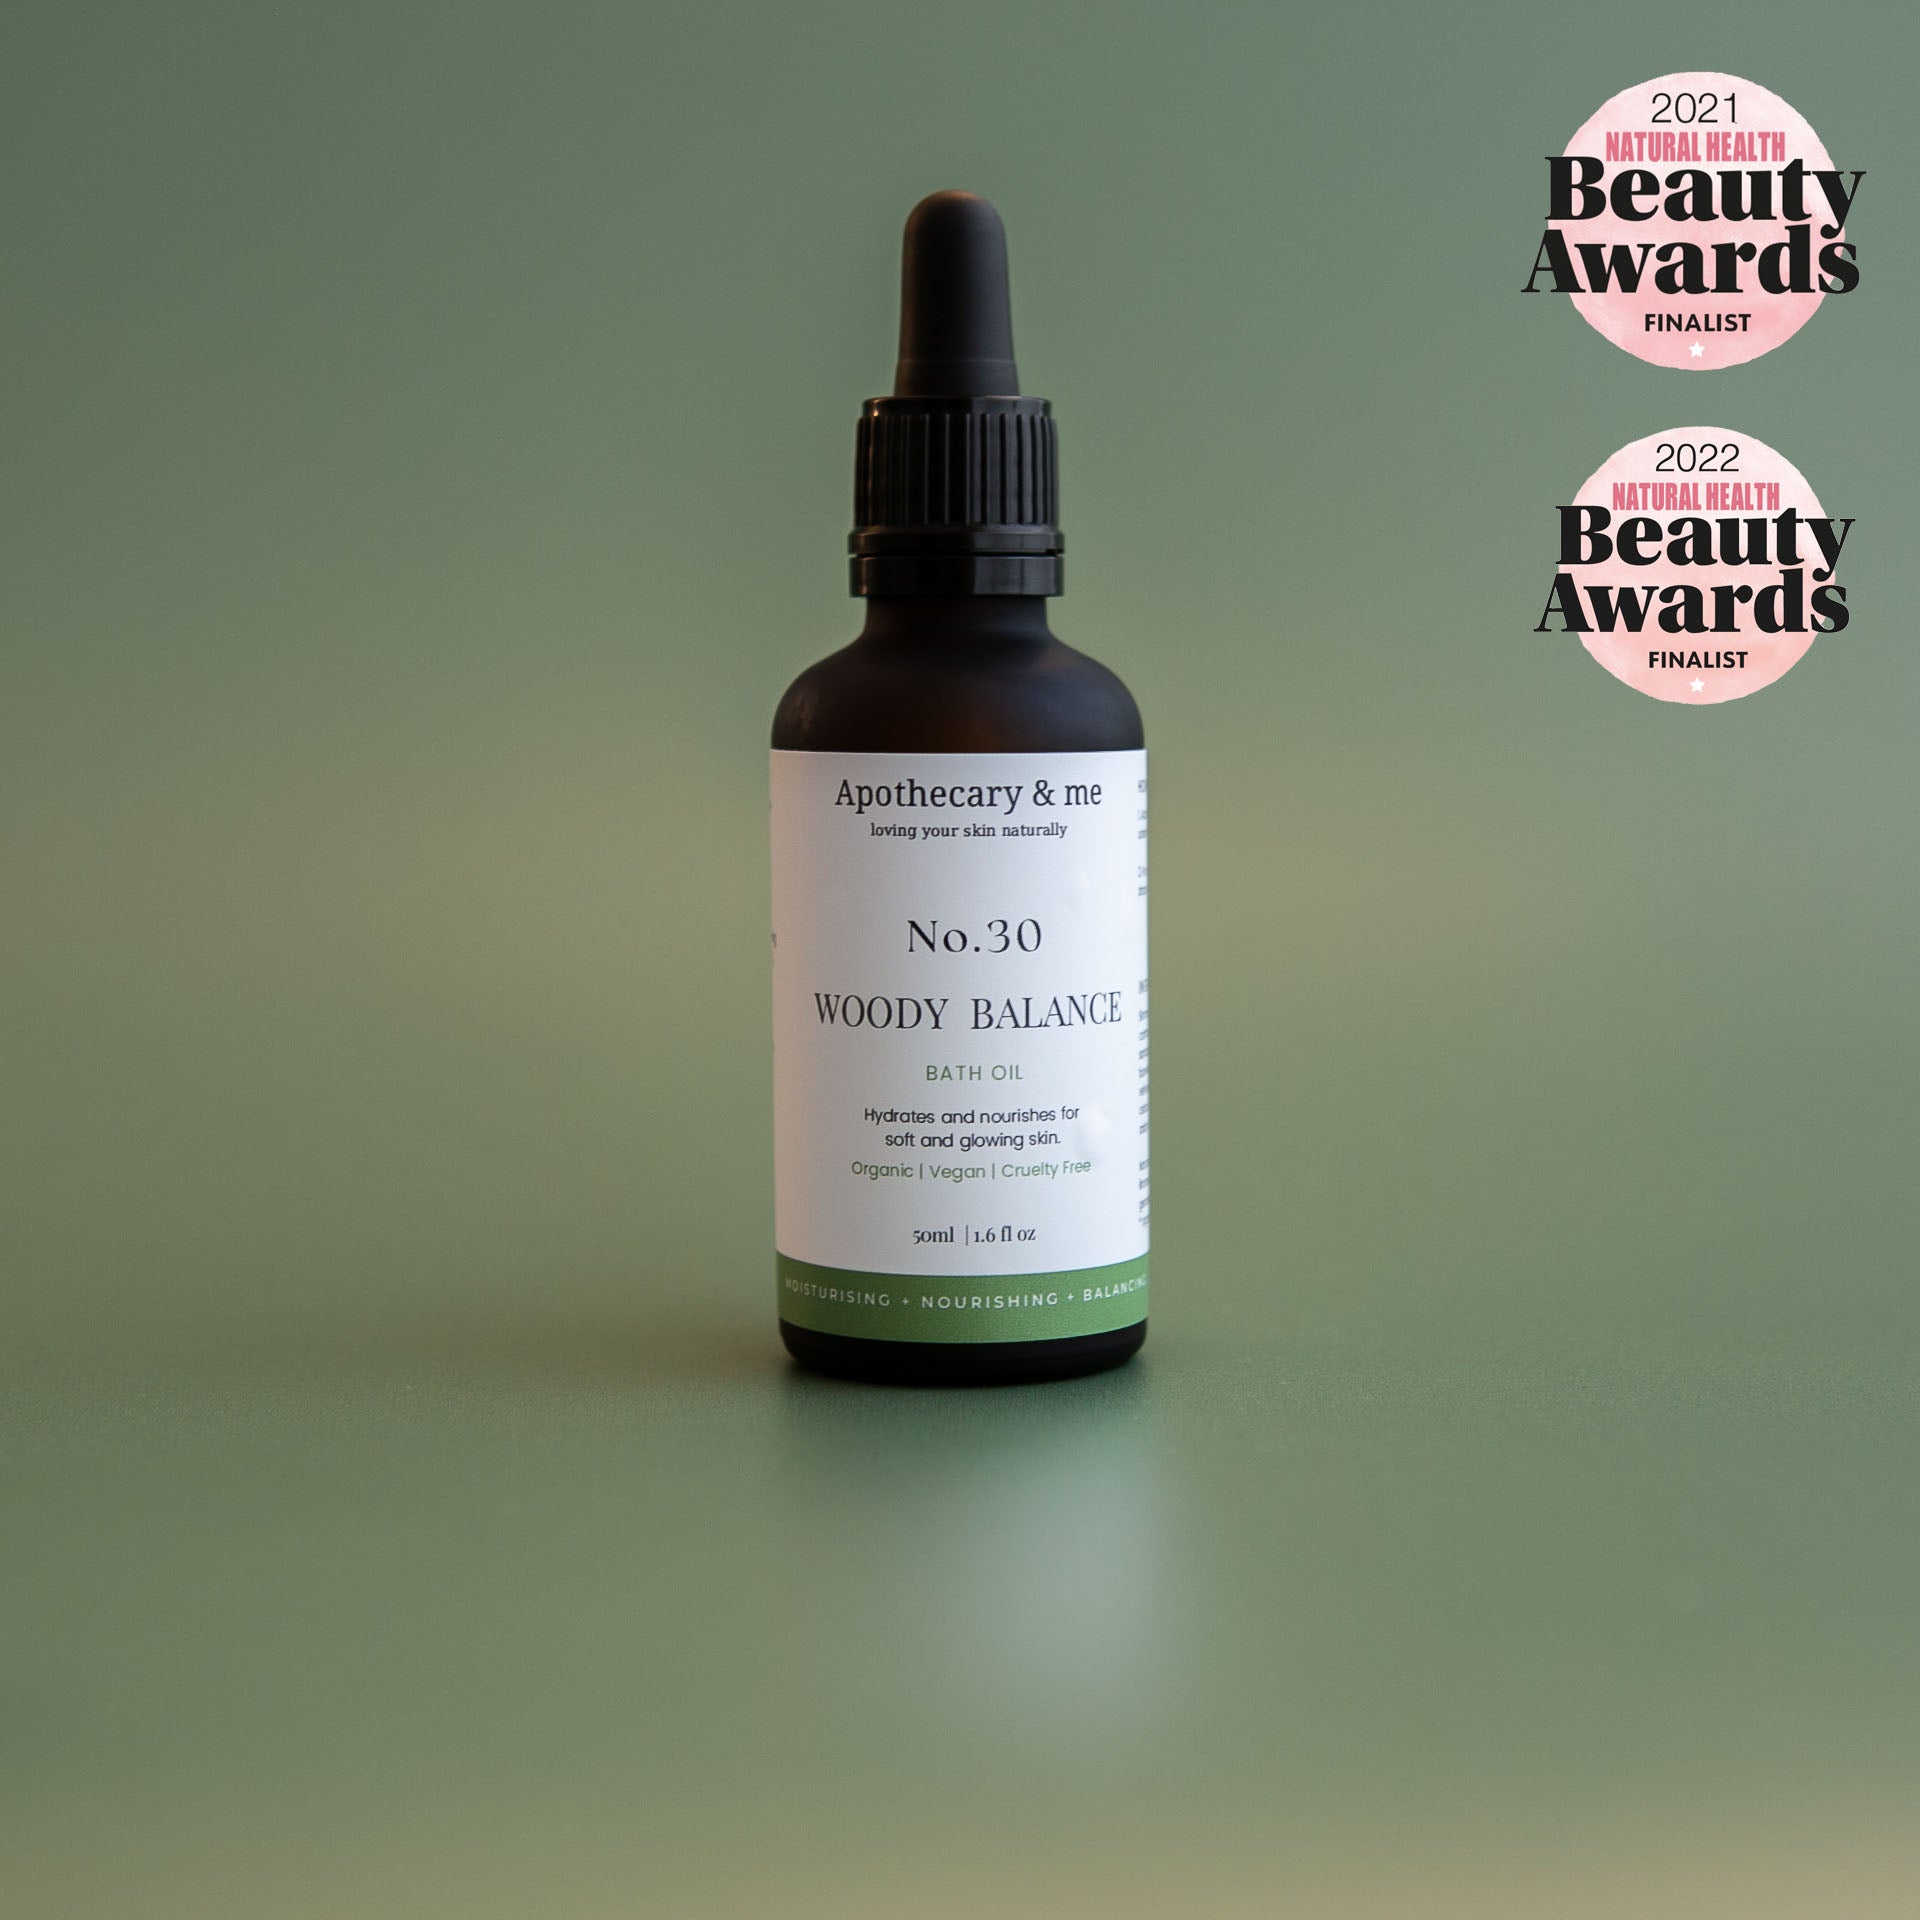 Woody Balance Bath Oil, Natural Health Beauty Awards